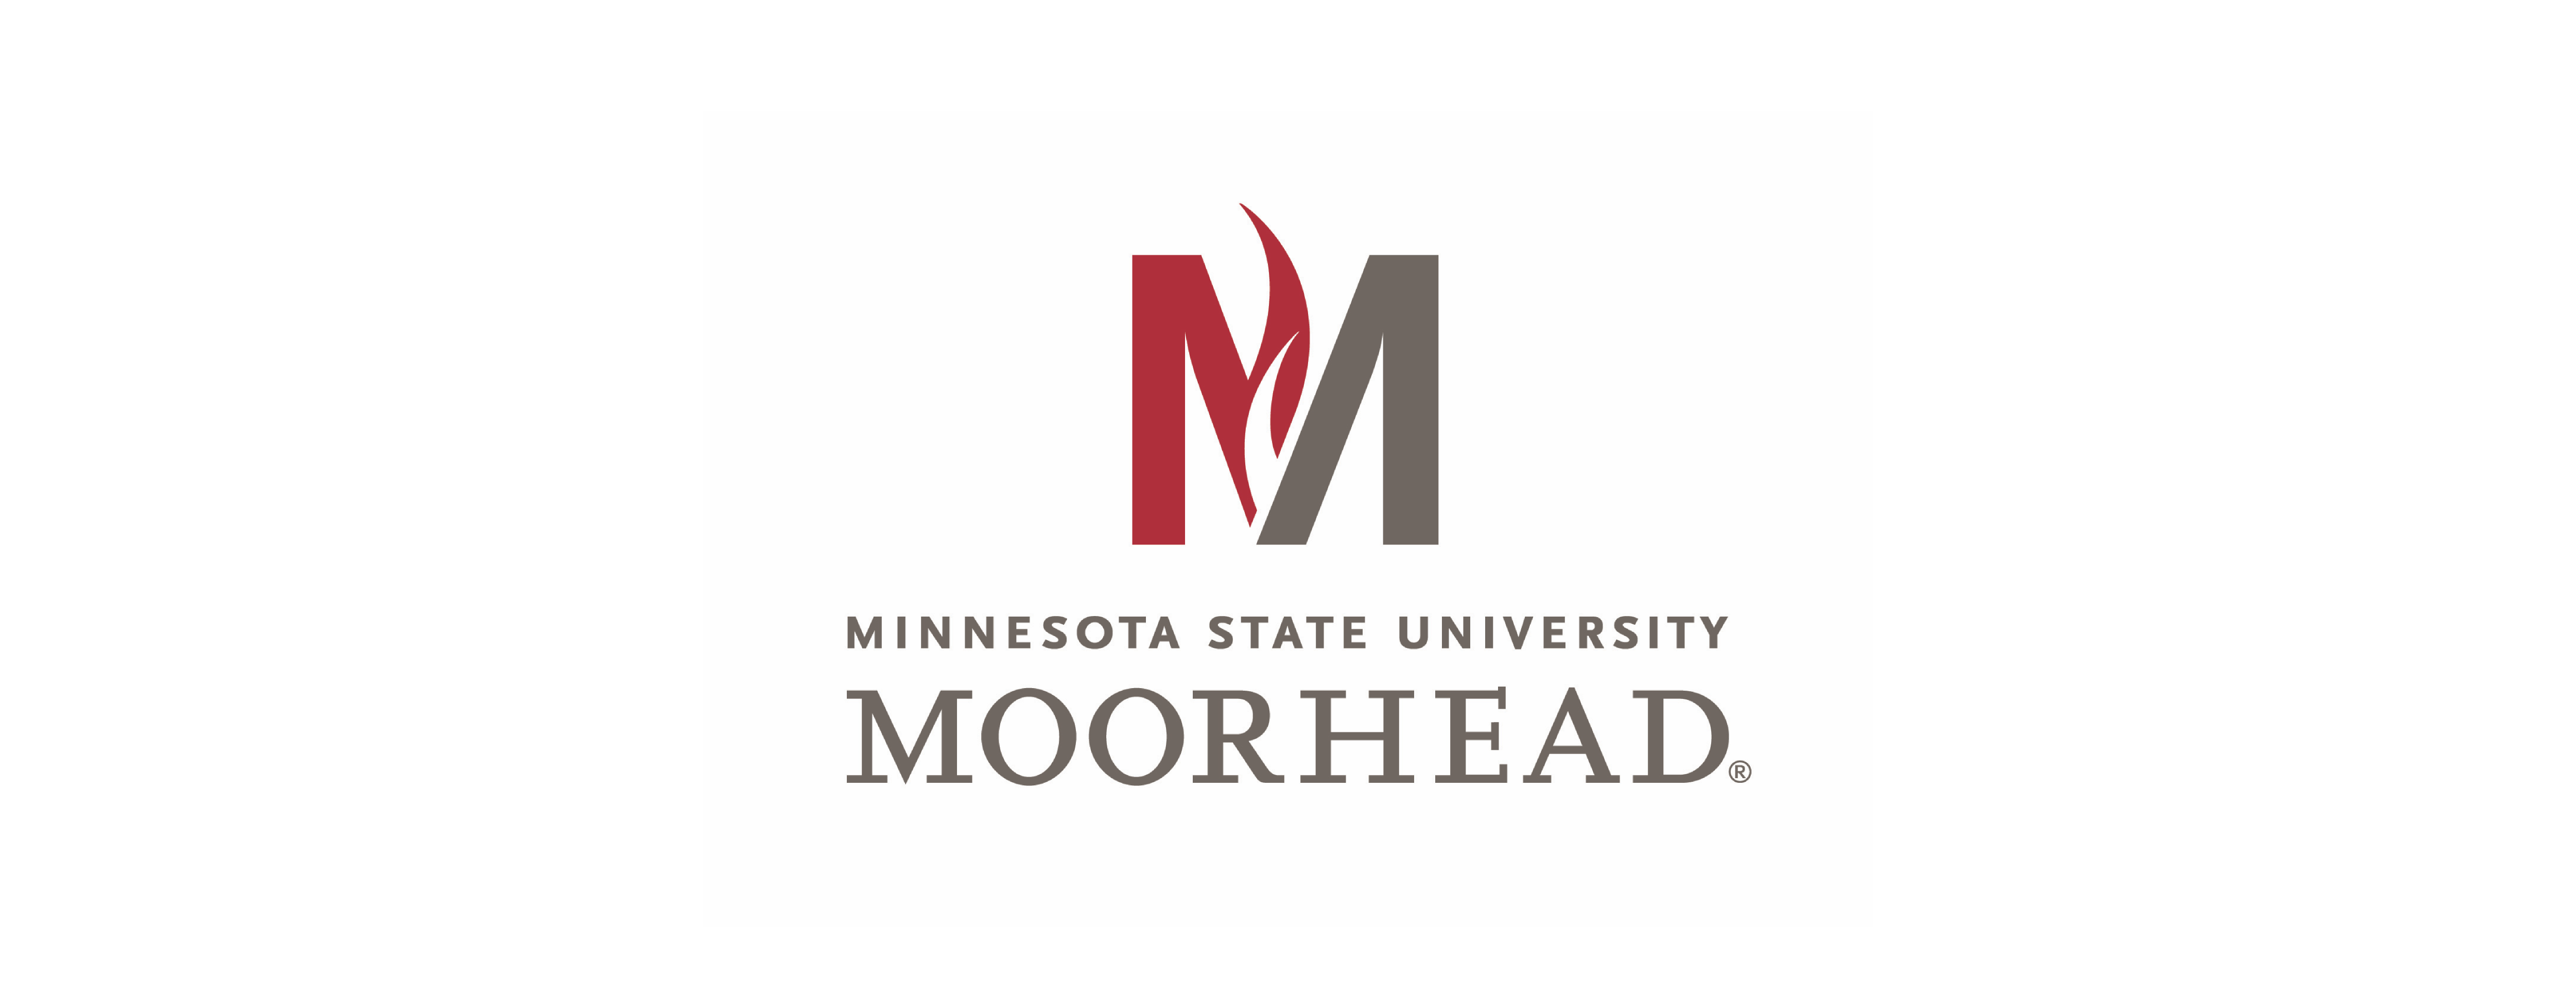 Minnesota State University Moorhead, logo.